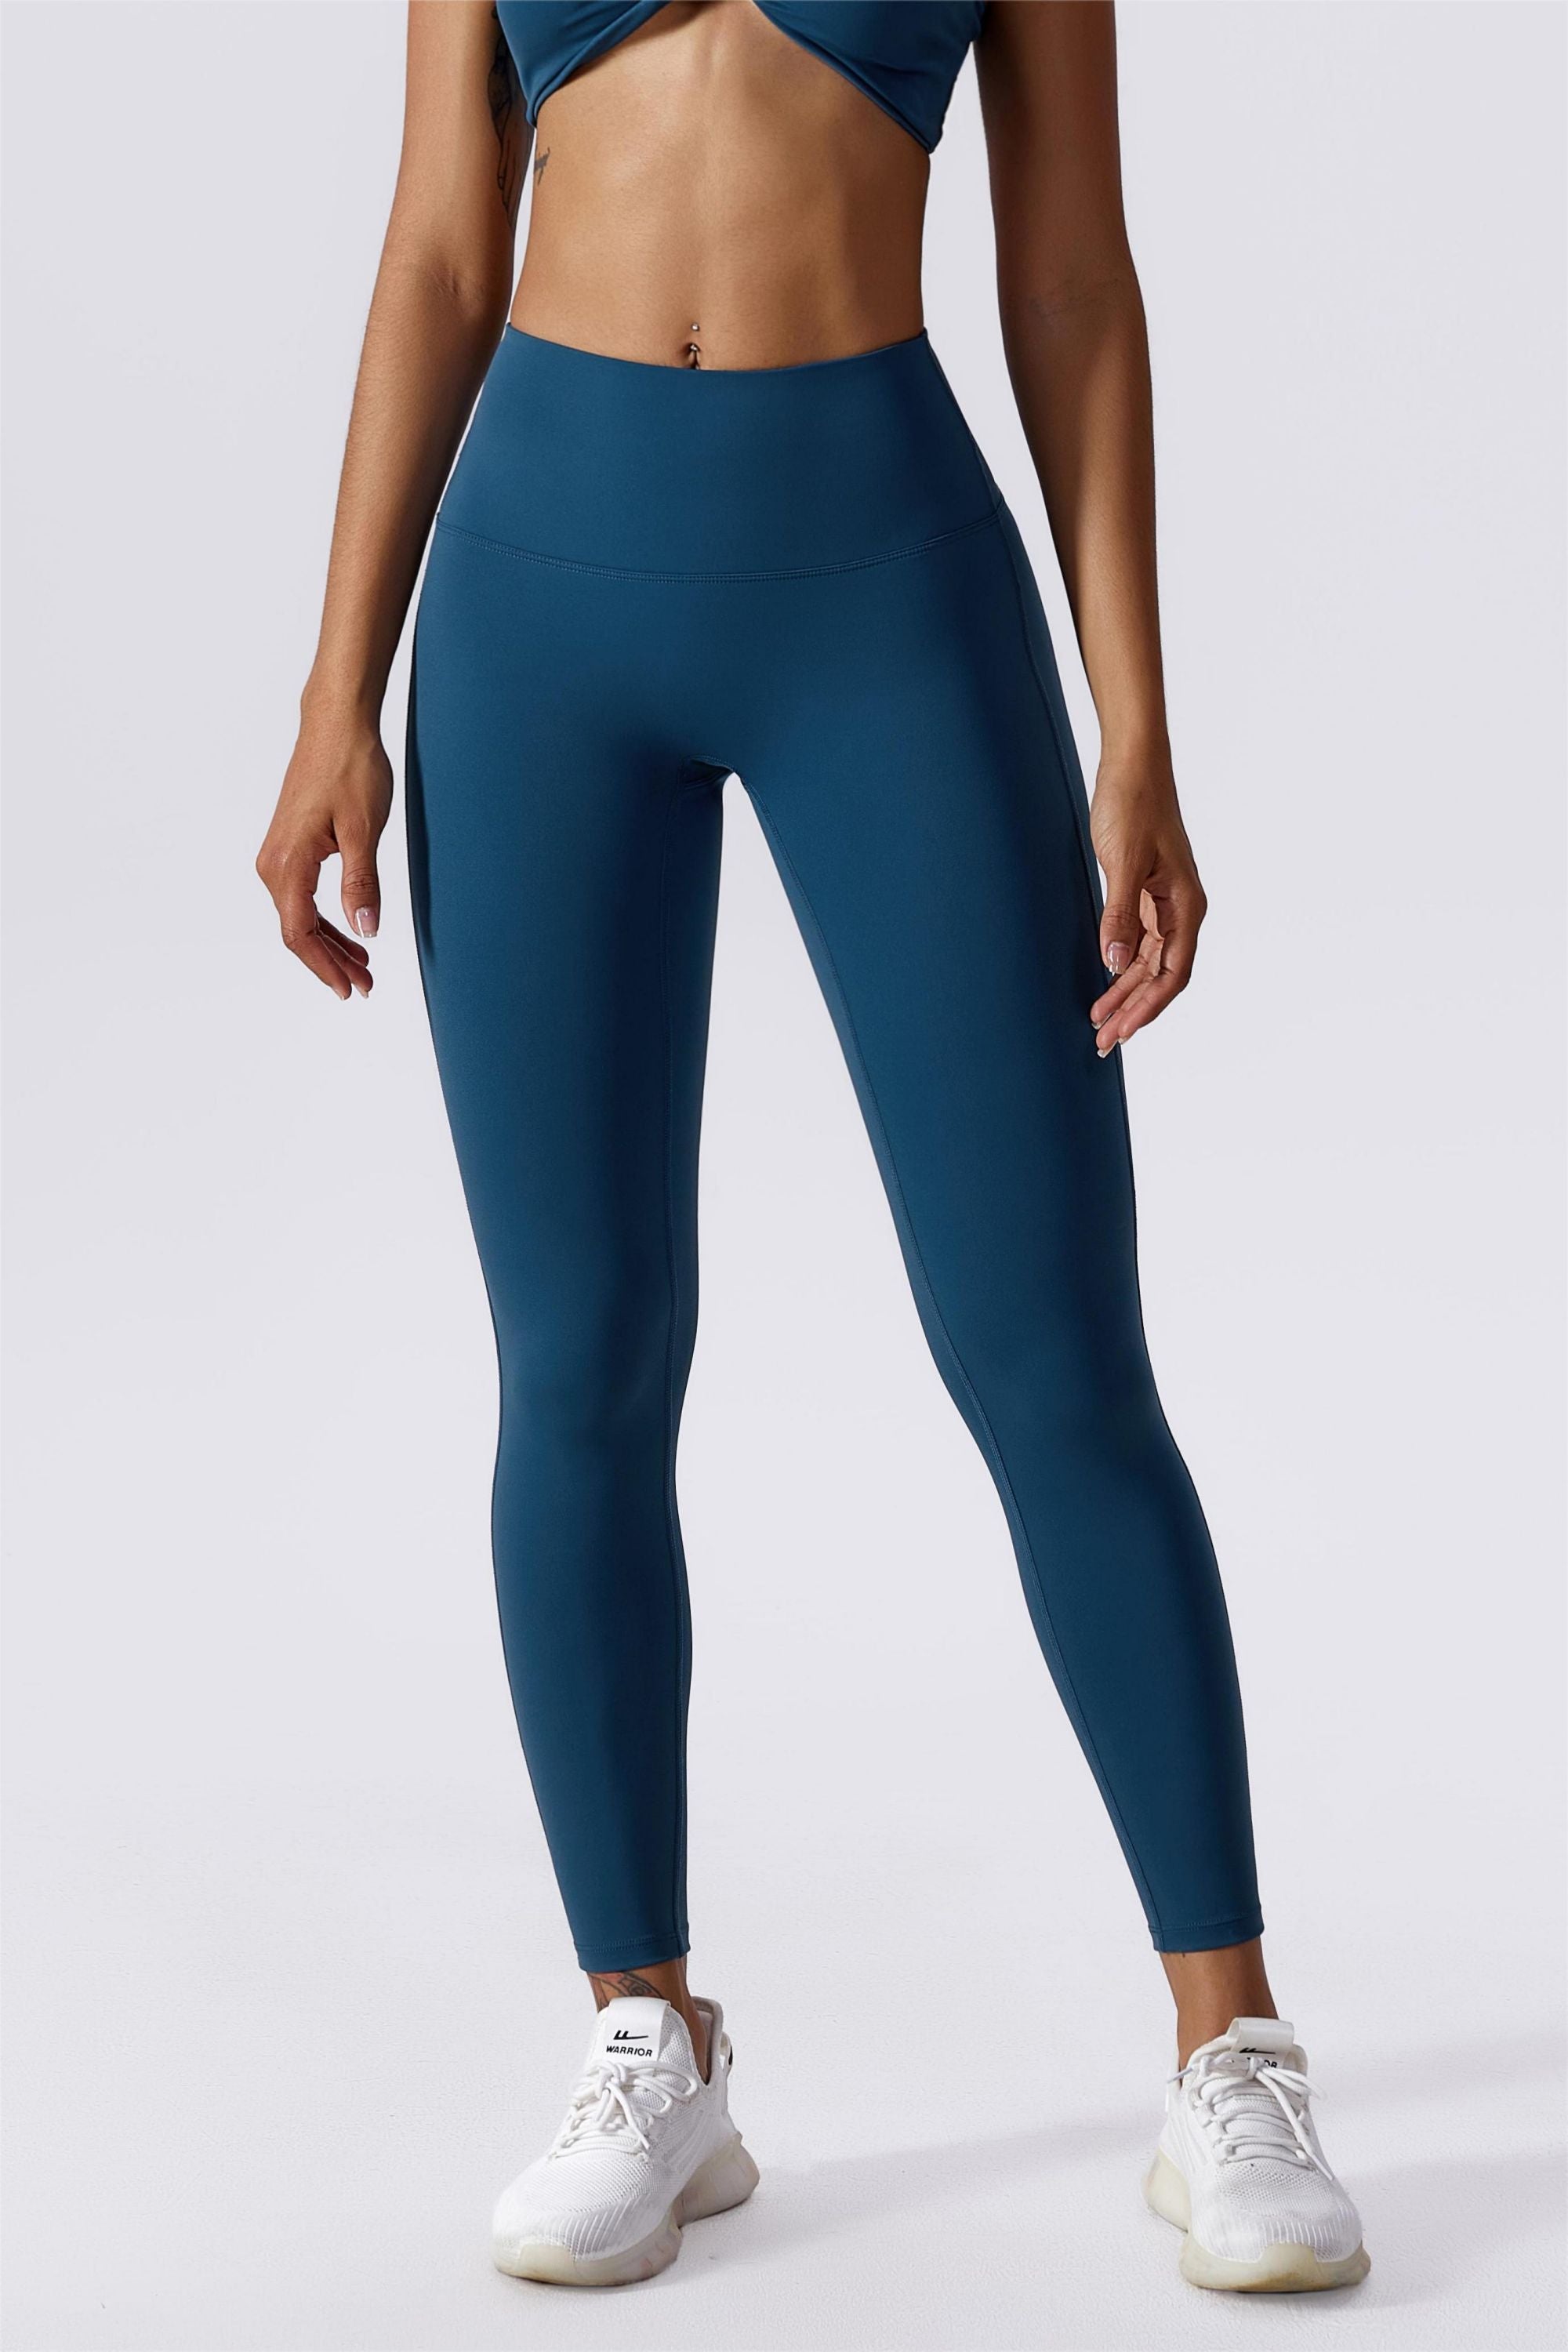 Buy Blue Leggings for Women by PERFORMAX Online | Ajio.com